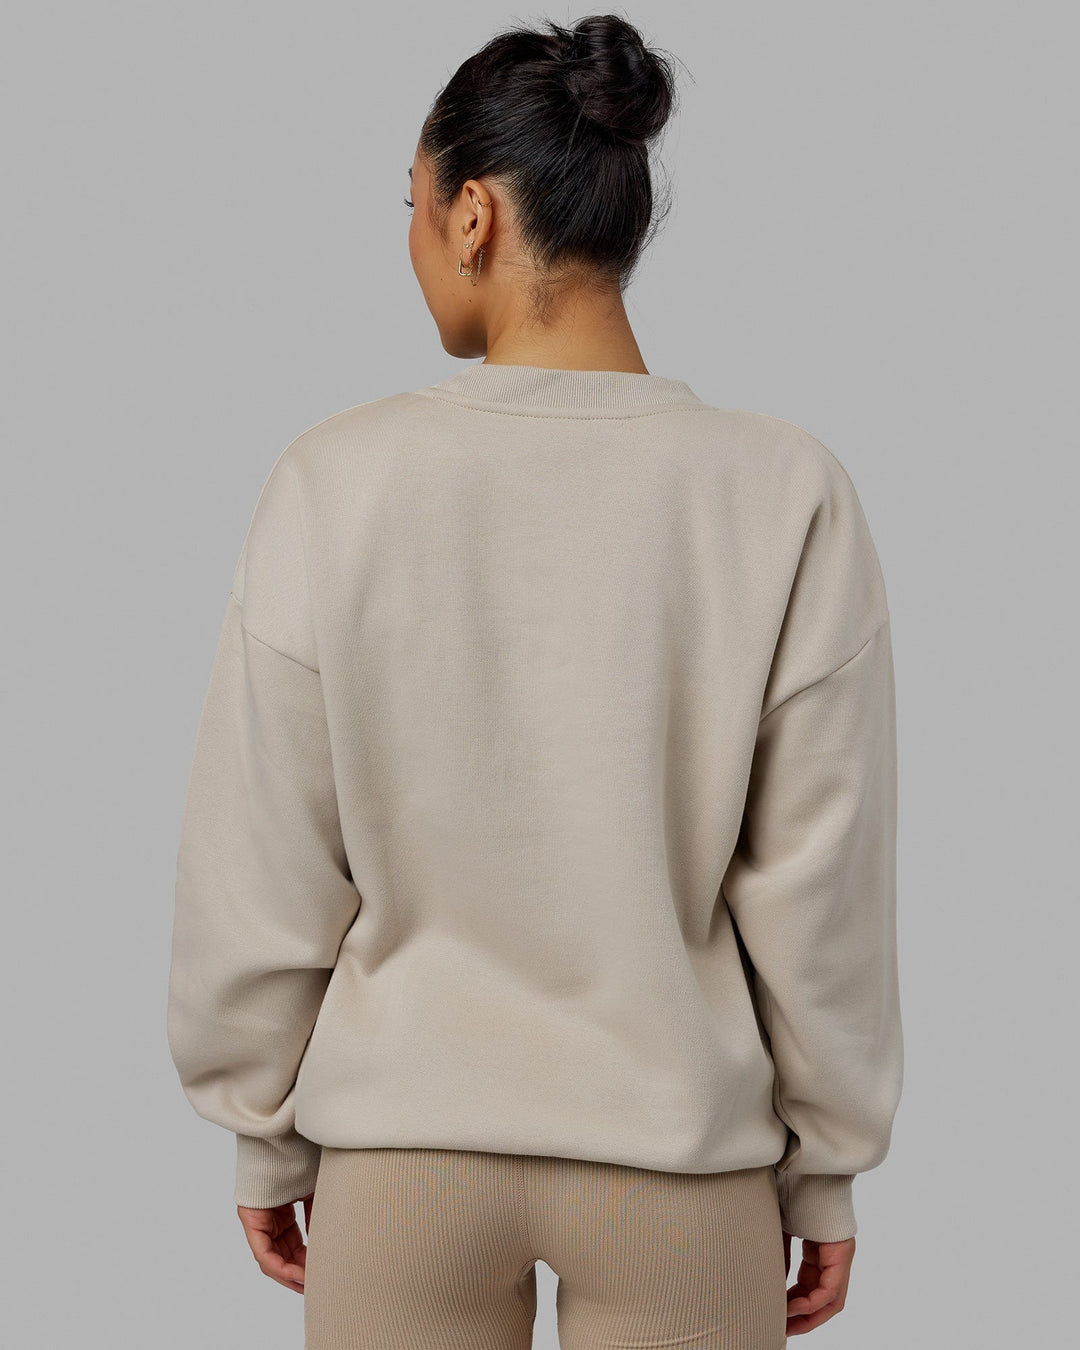 Woman wearing Unisex Free Throw Sweater Oversize - Shale Beige